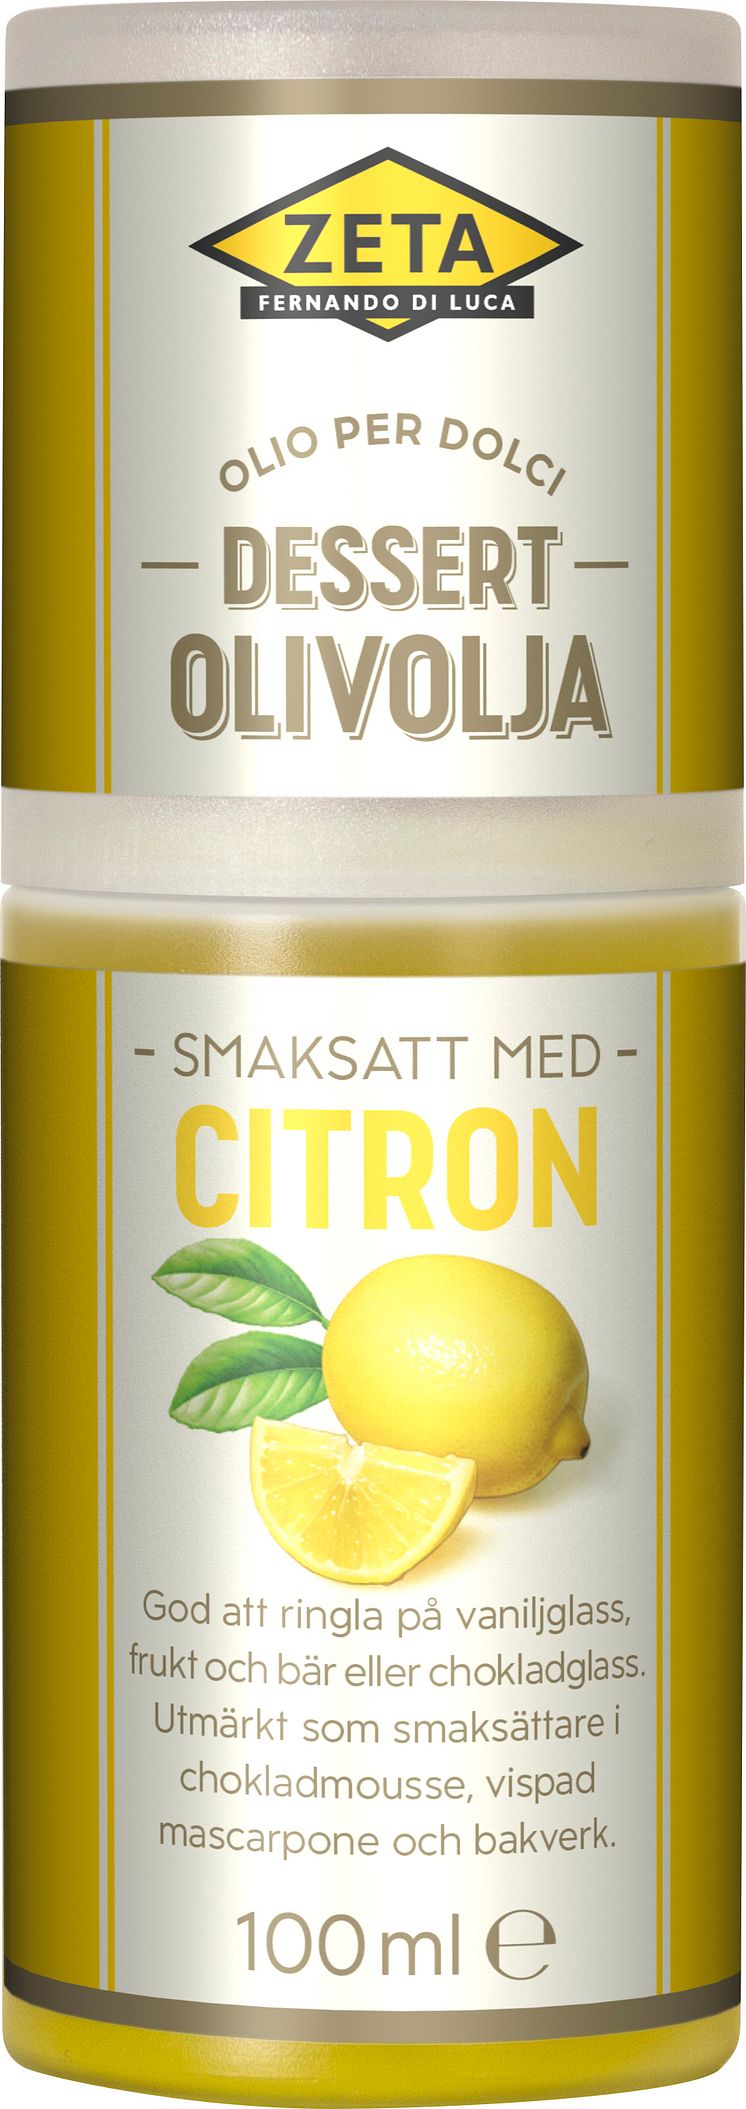 Produktbild Zeta dessertolivolja Citron